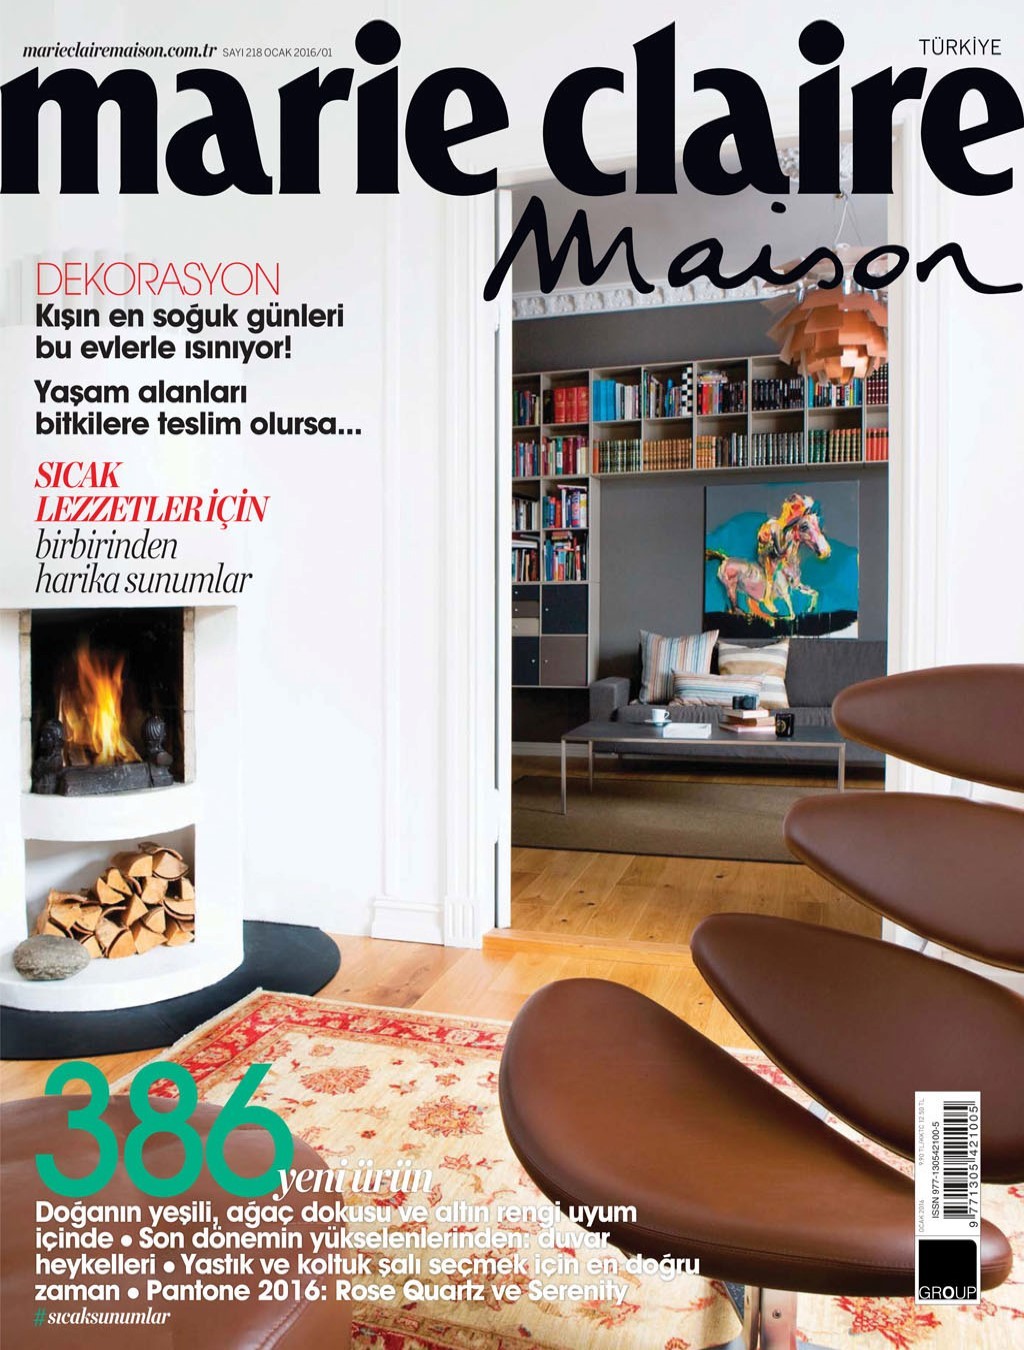 Marie Claire Maison Ocak Sandalca E-dergi indir